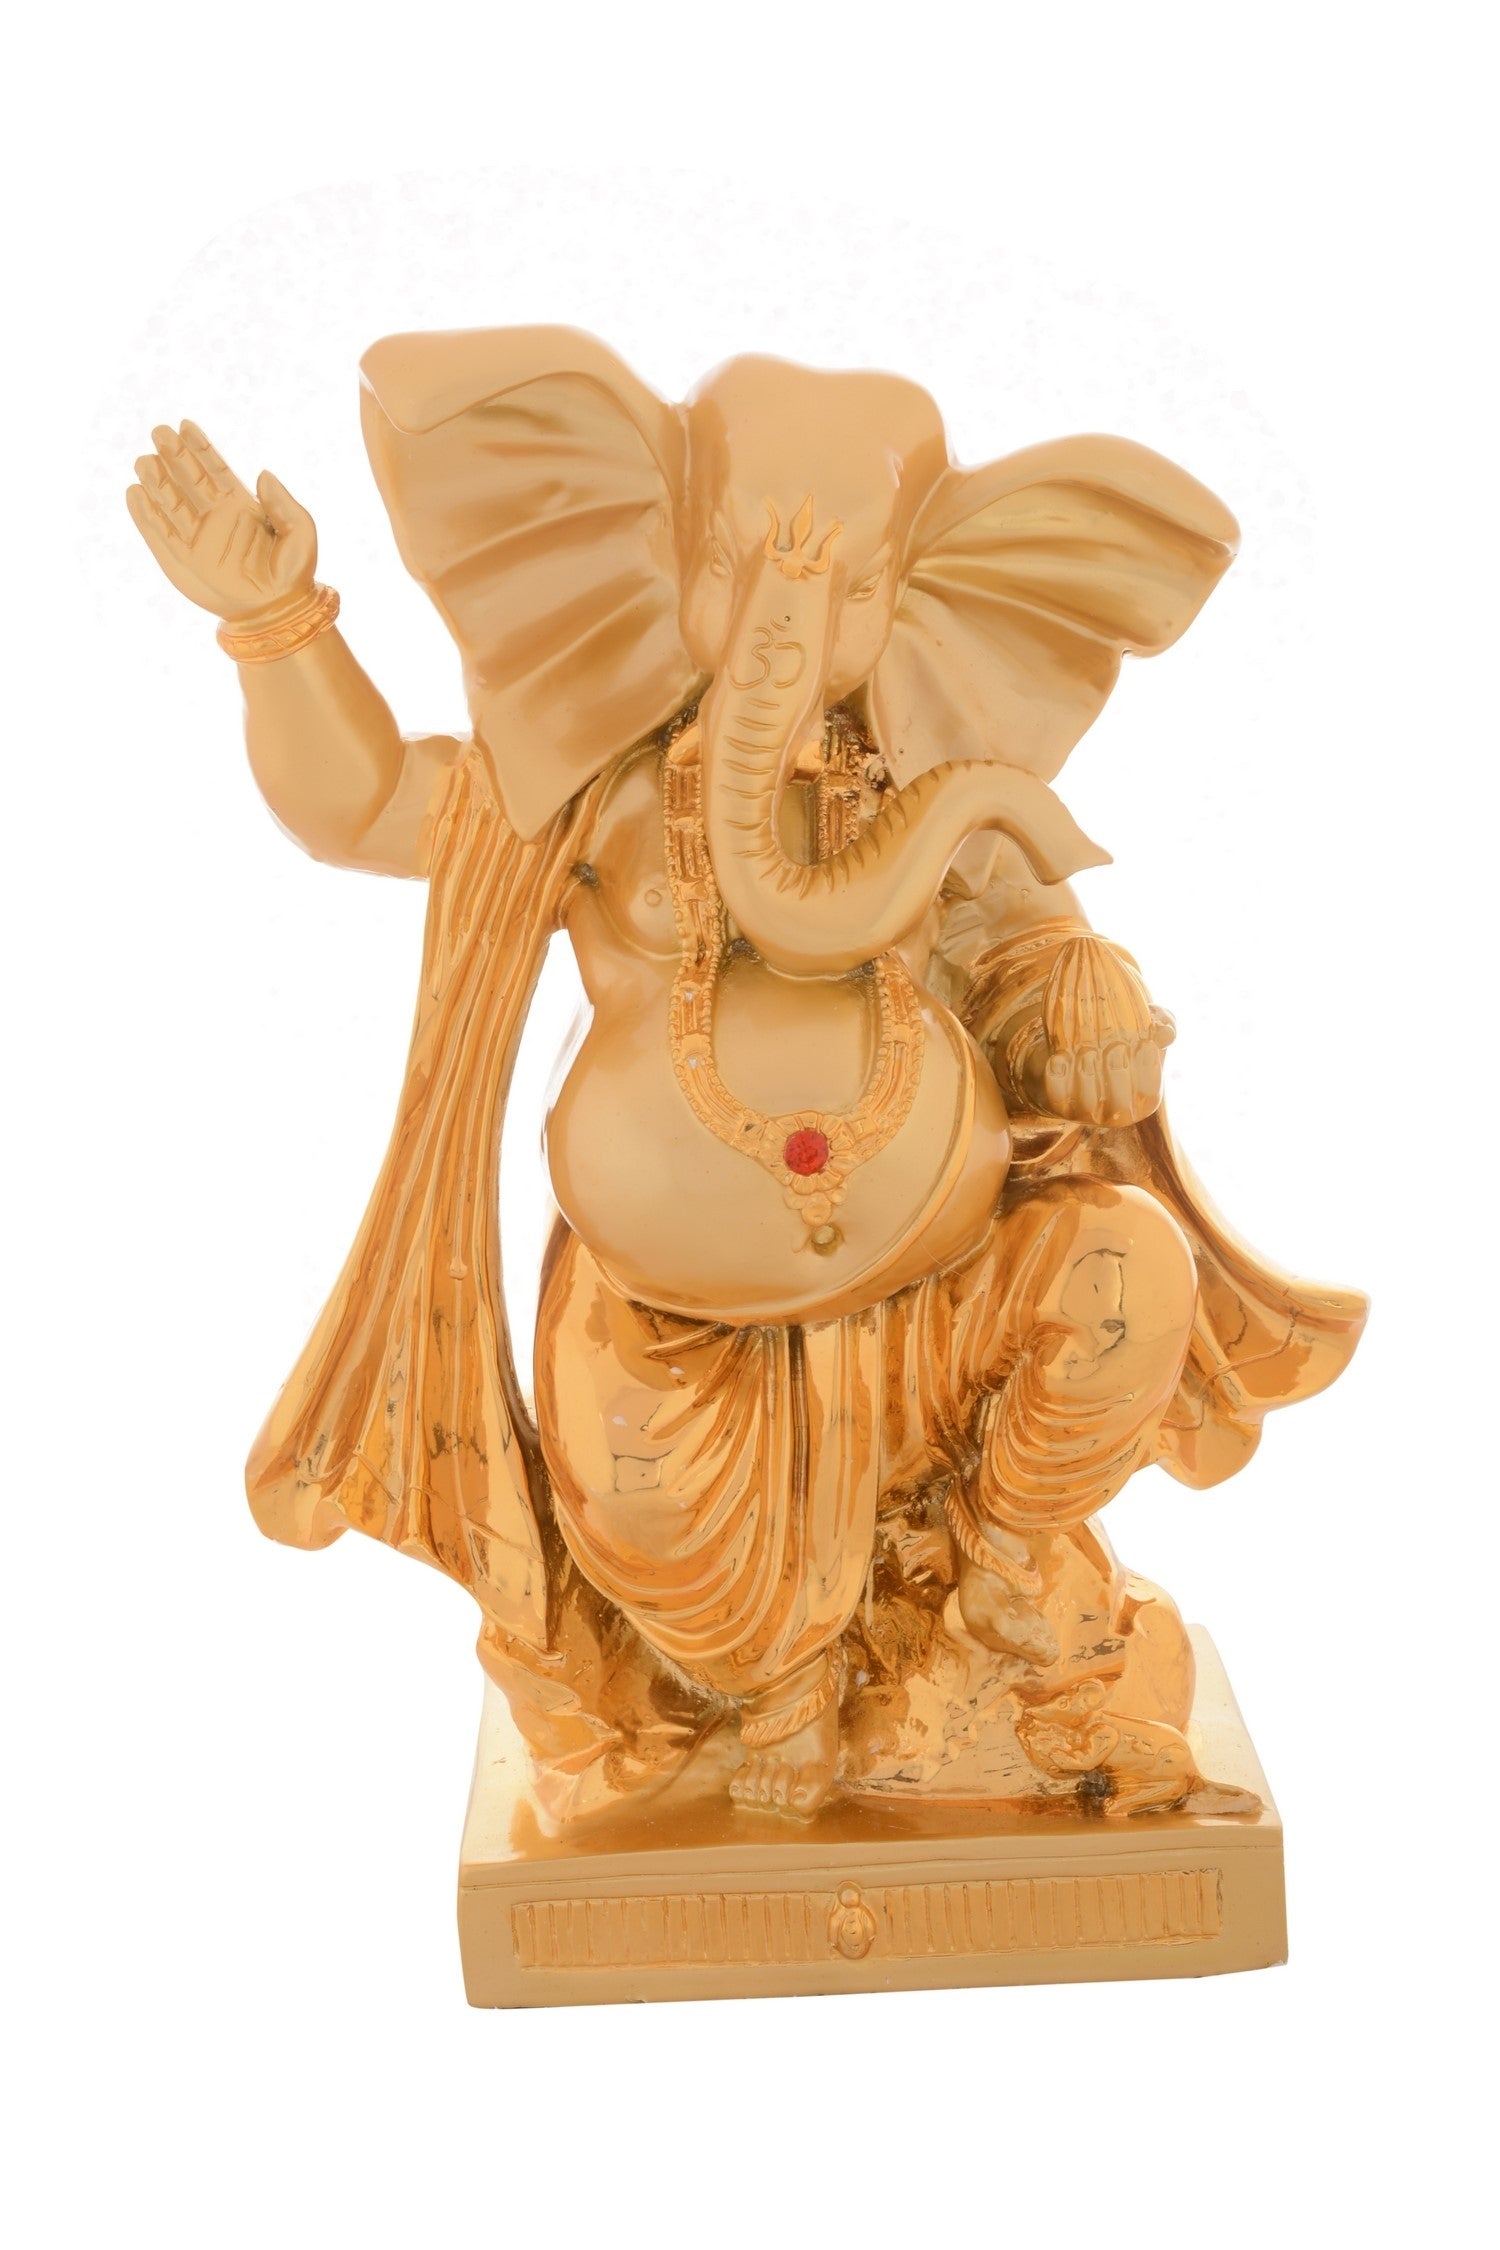 Premium Figurine of Lord Ganesha in Dancing Position